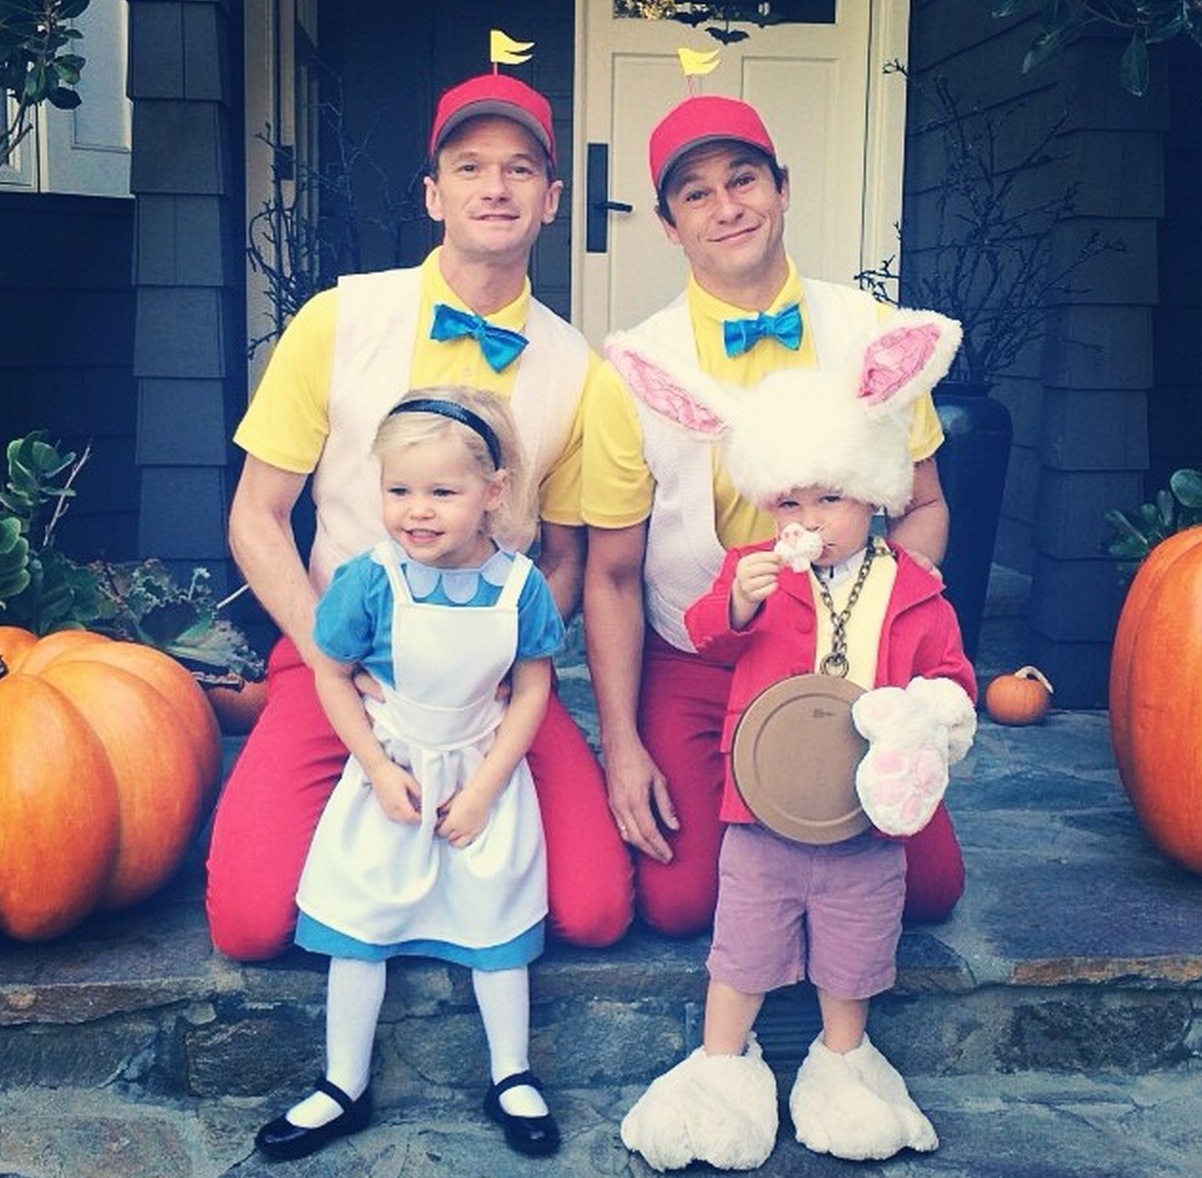 Neil Patrick Harris' Cute Family Halloween Costume | The Mary Sue